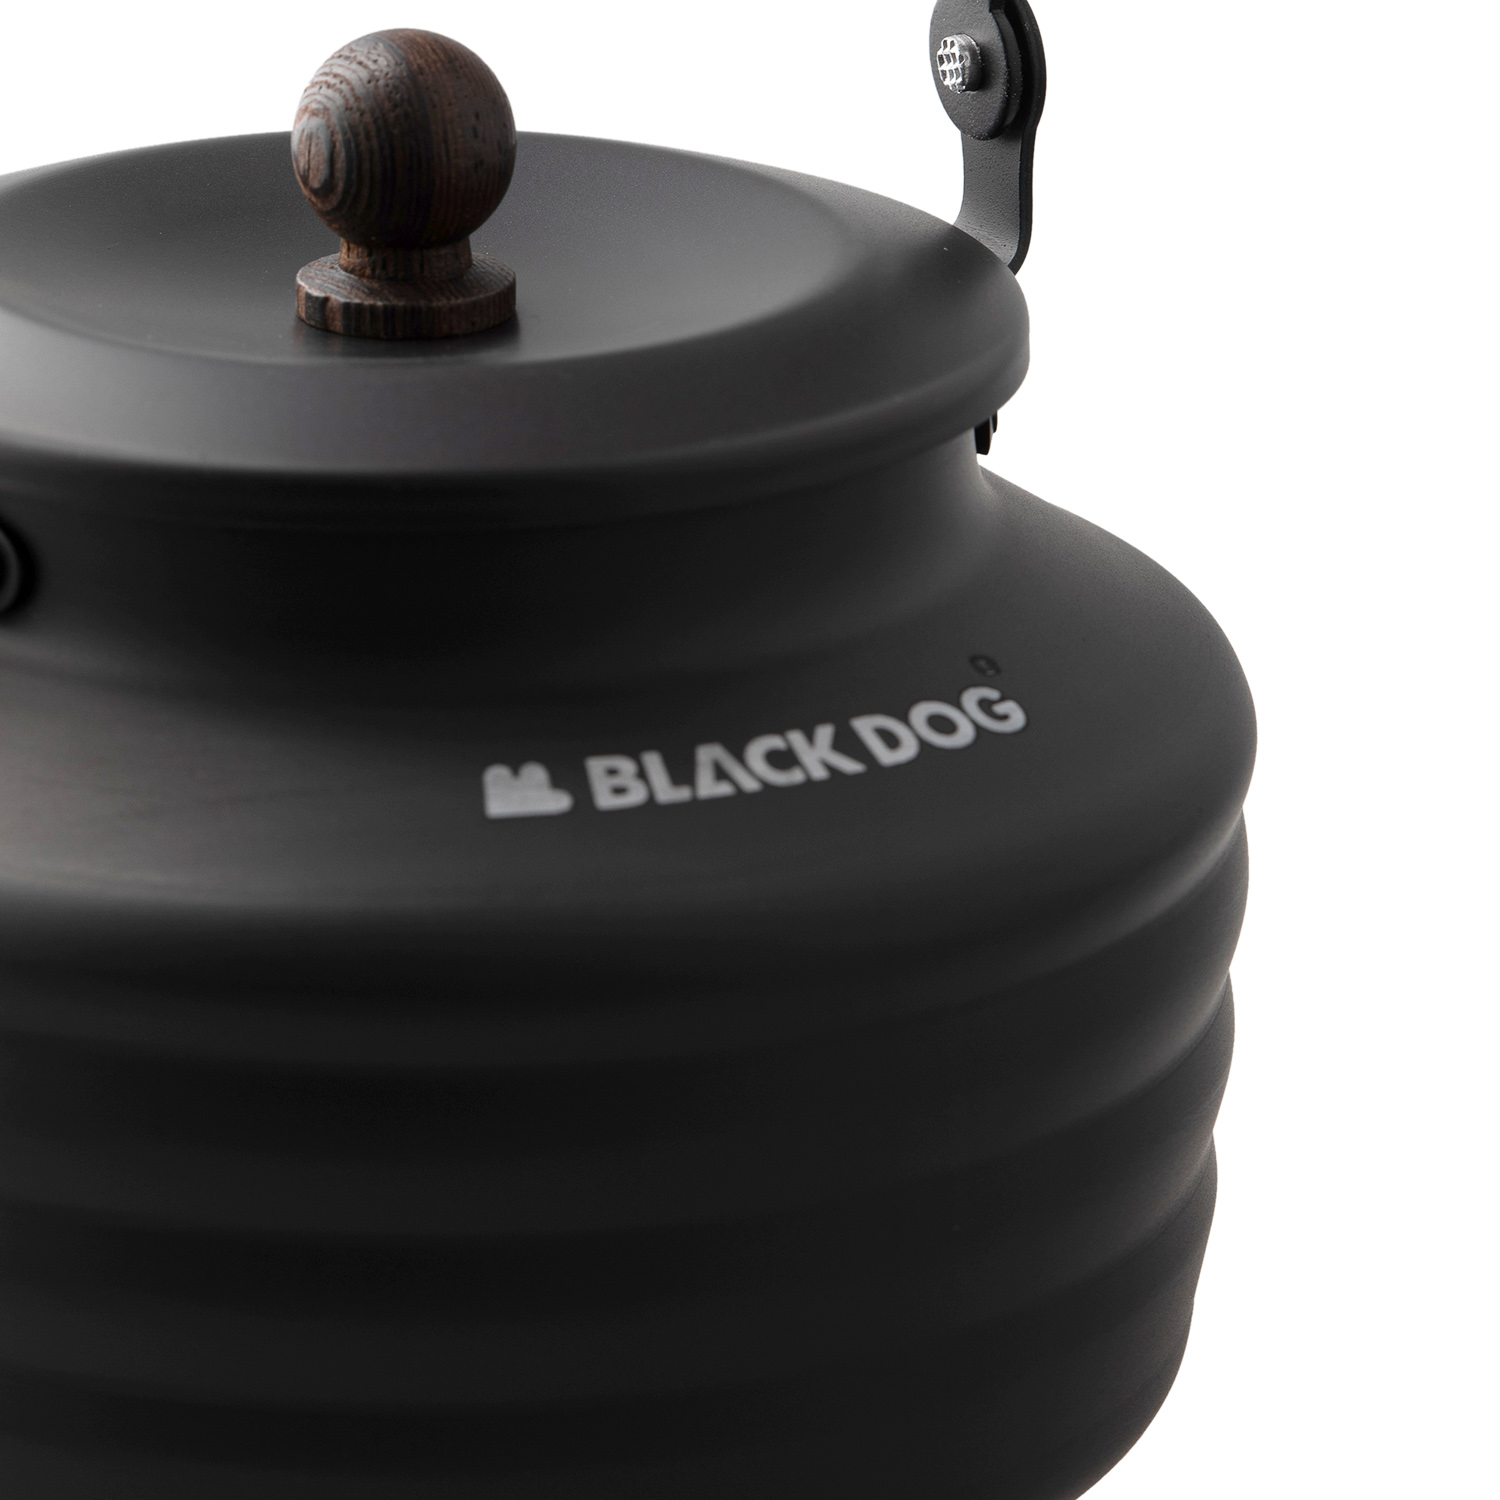 Чайник BlackDog Tea Pot 1.3L Black